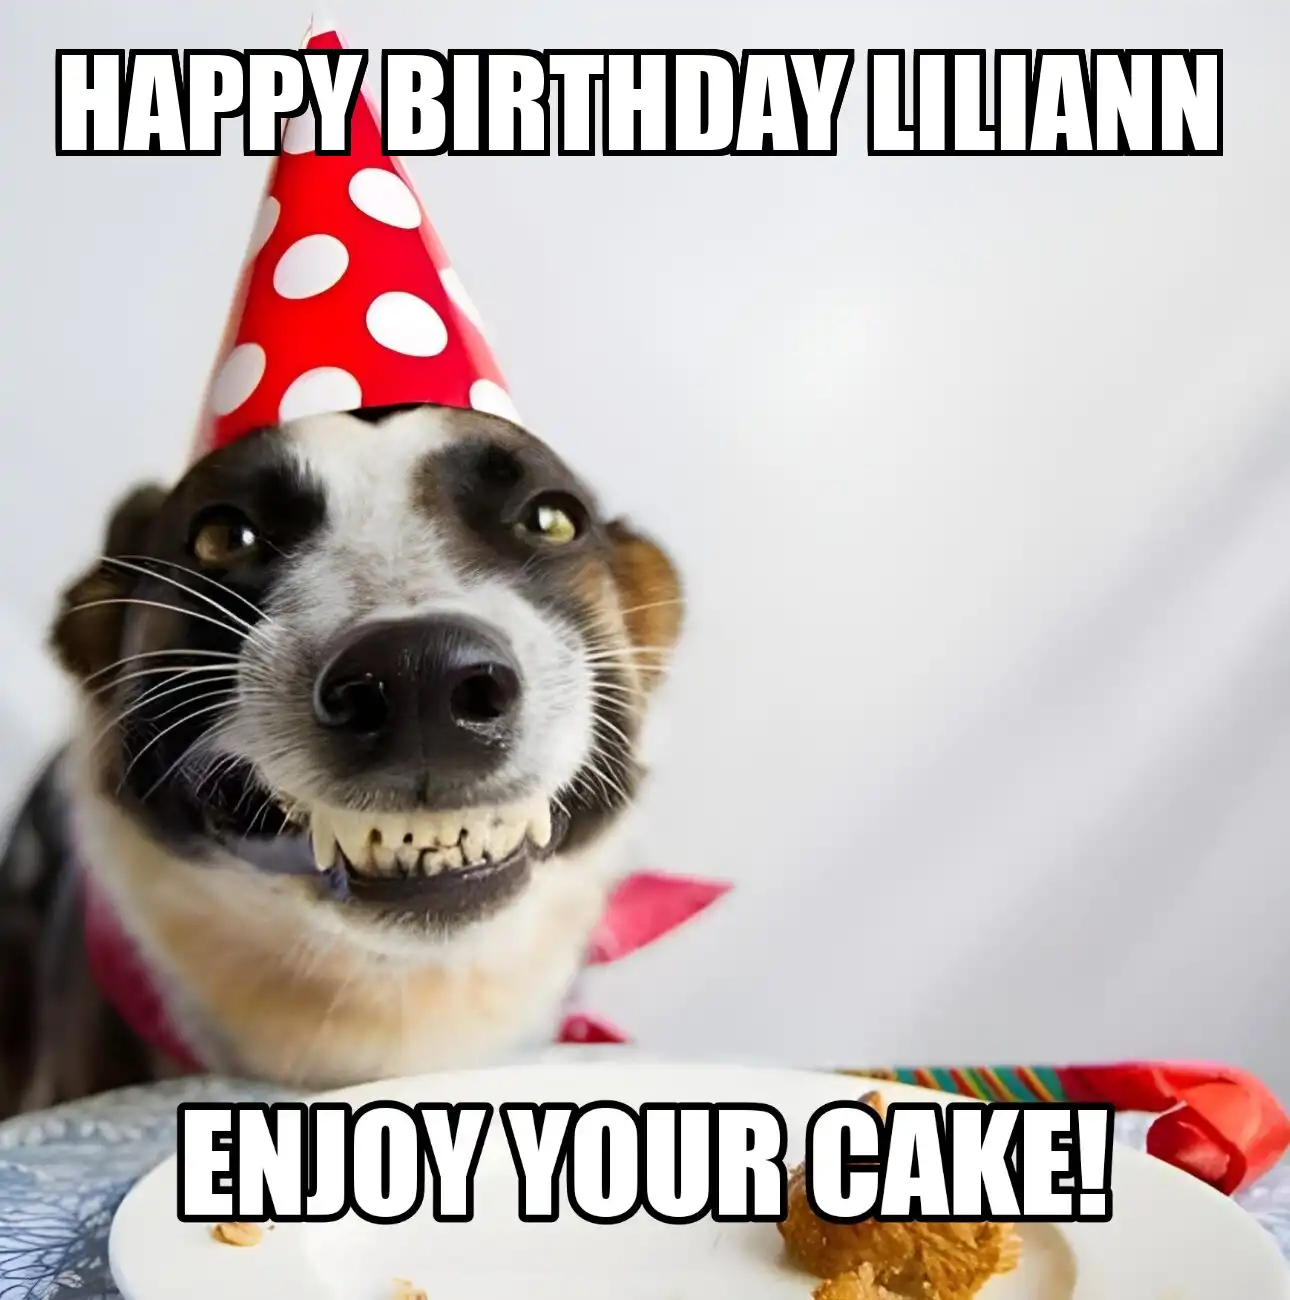 Happy Birthday Liliann Enjoy Your Cake Dog Meme